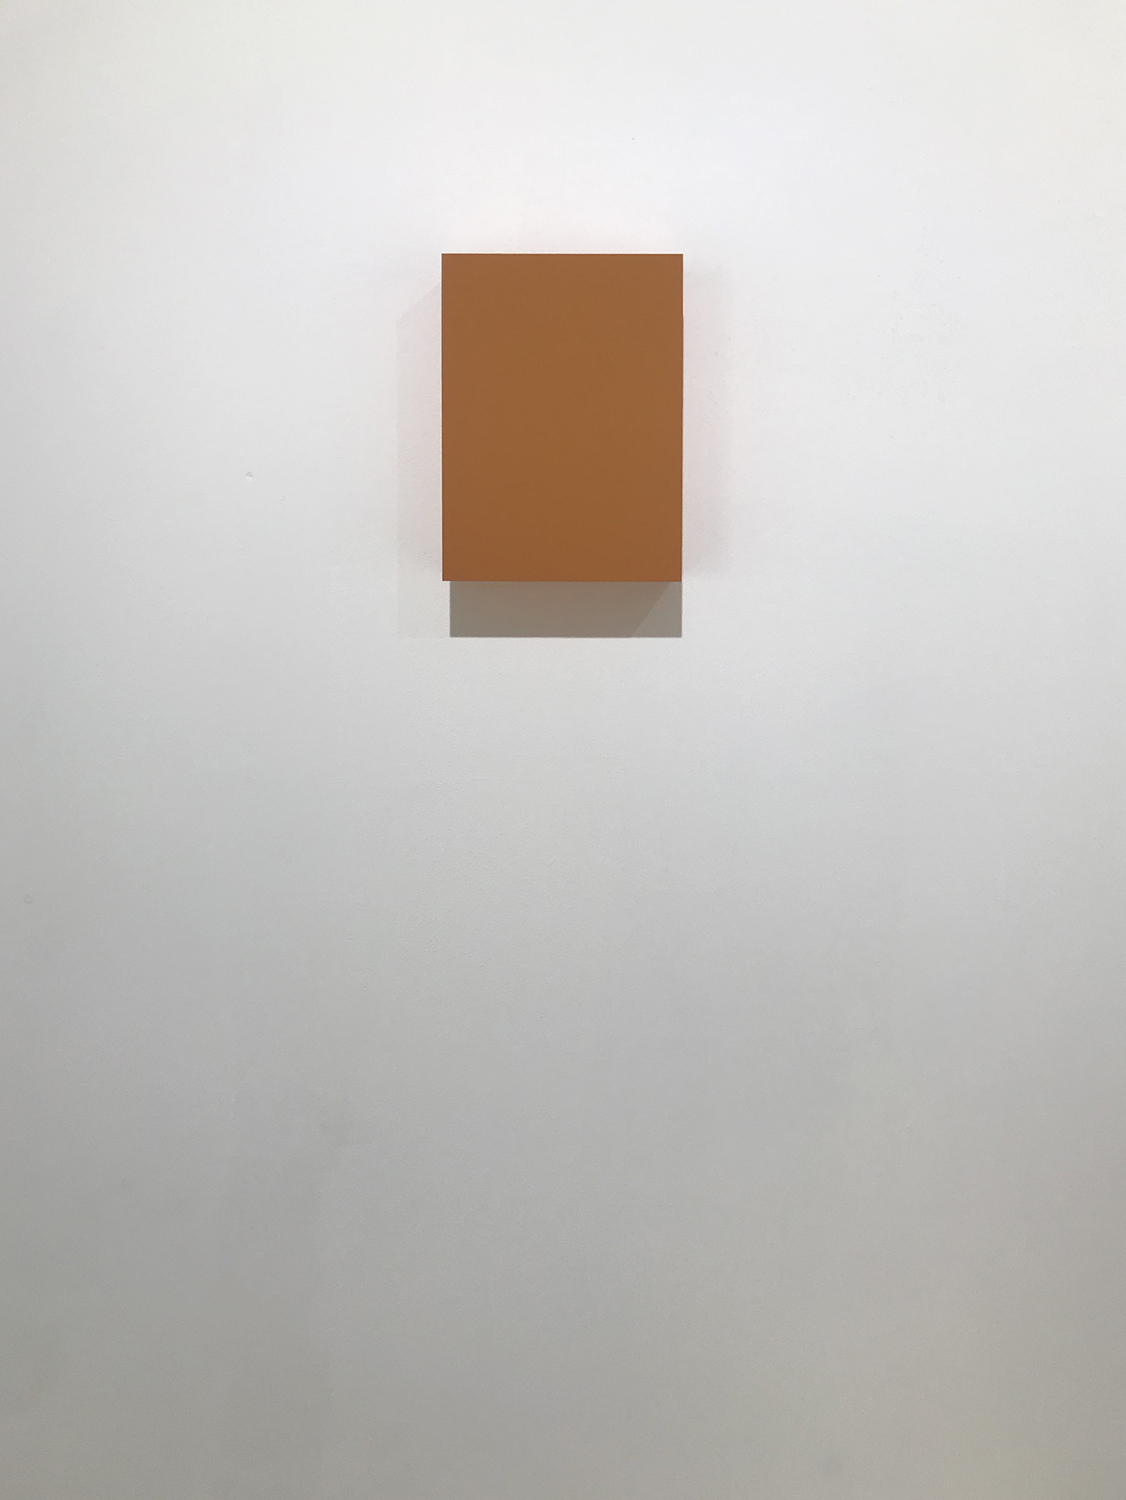 越野潤｜JUN KOSHINO<br>WORK16-1 (brown), silkscreen paint on perspex, 150 x 100 x 50 mm, 2016